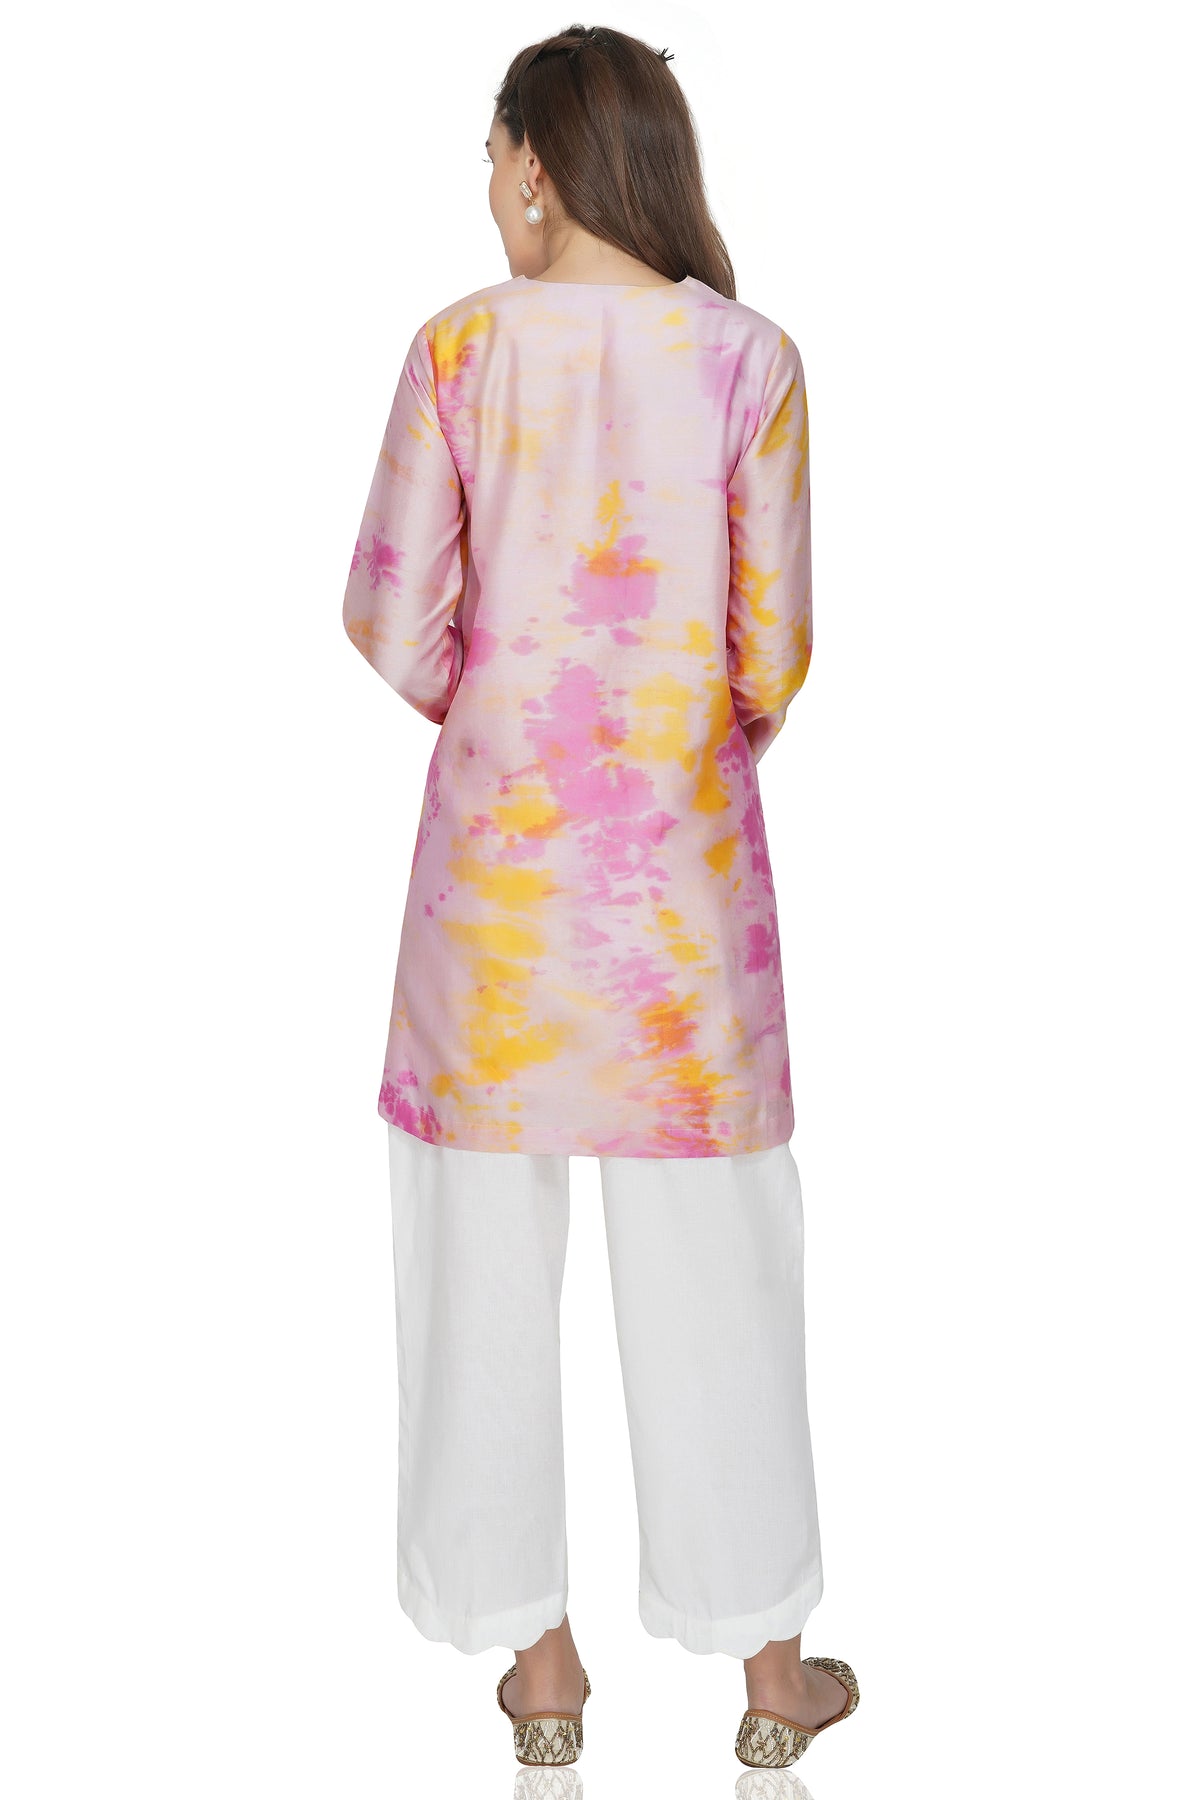 Pink Tie and Dye Chanderi Silk Kurta with White Cotton Pants - Set of 2